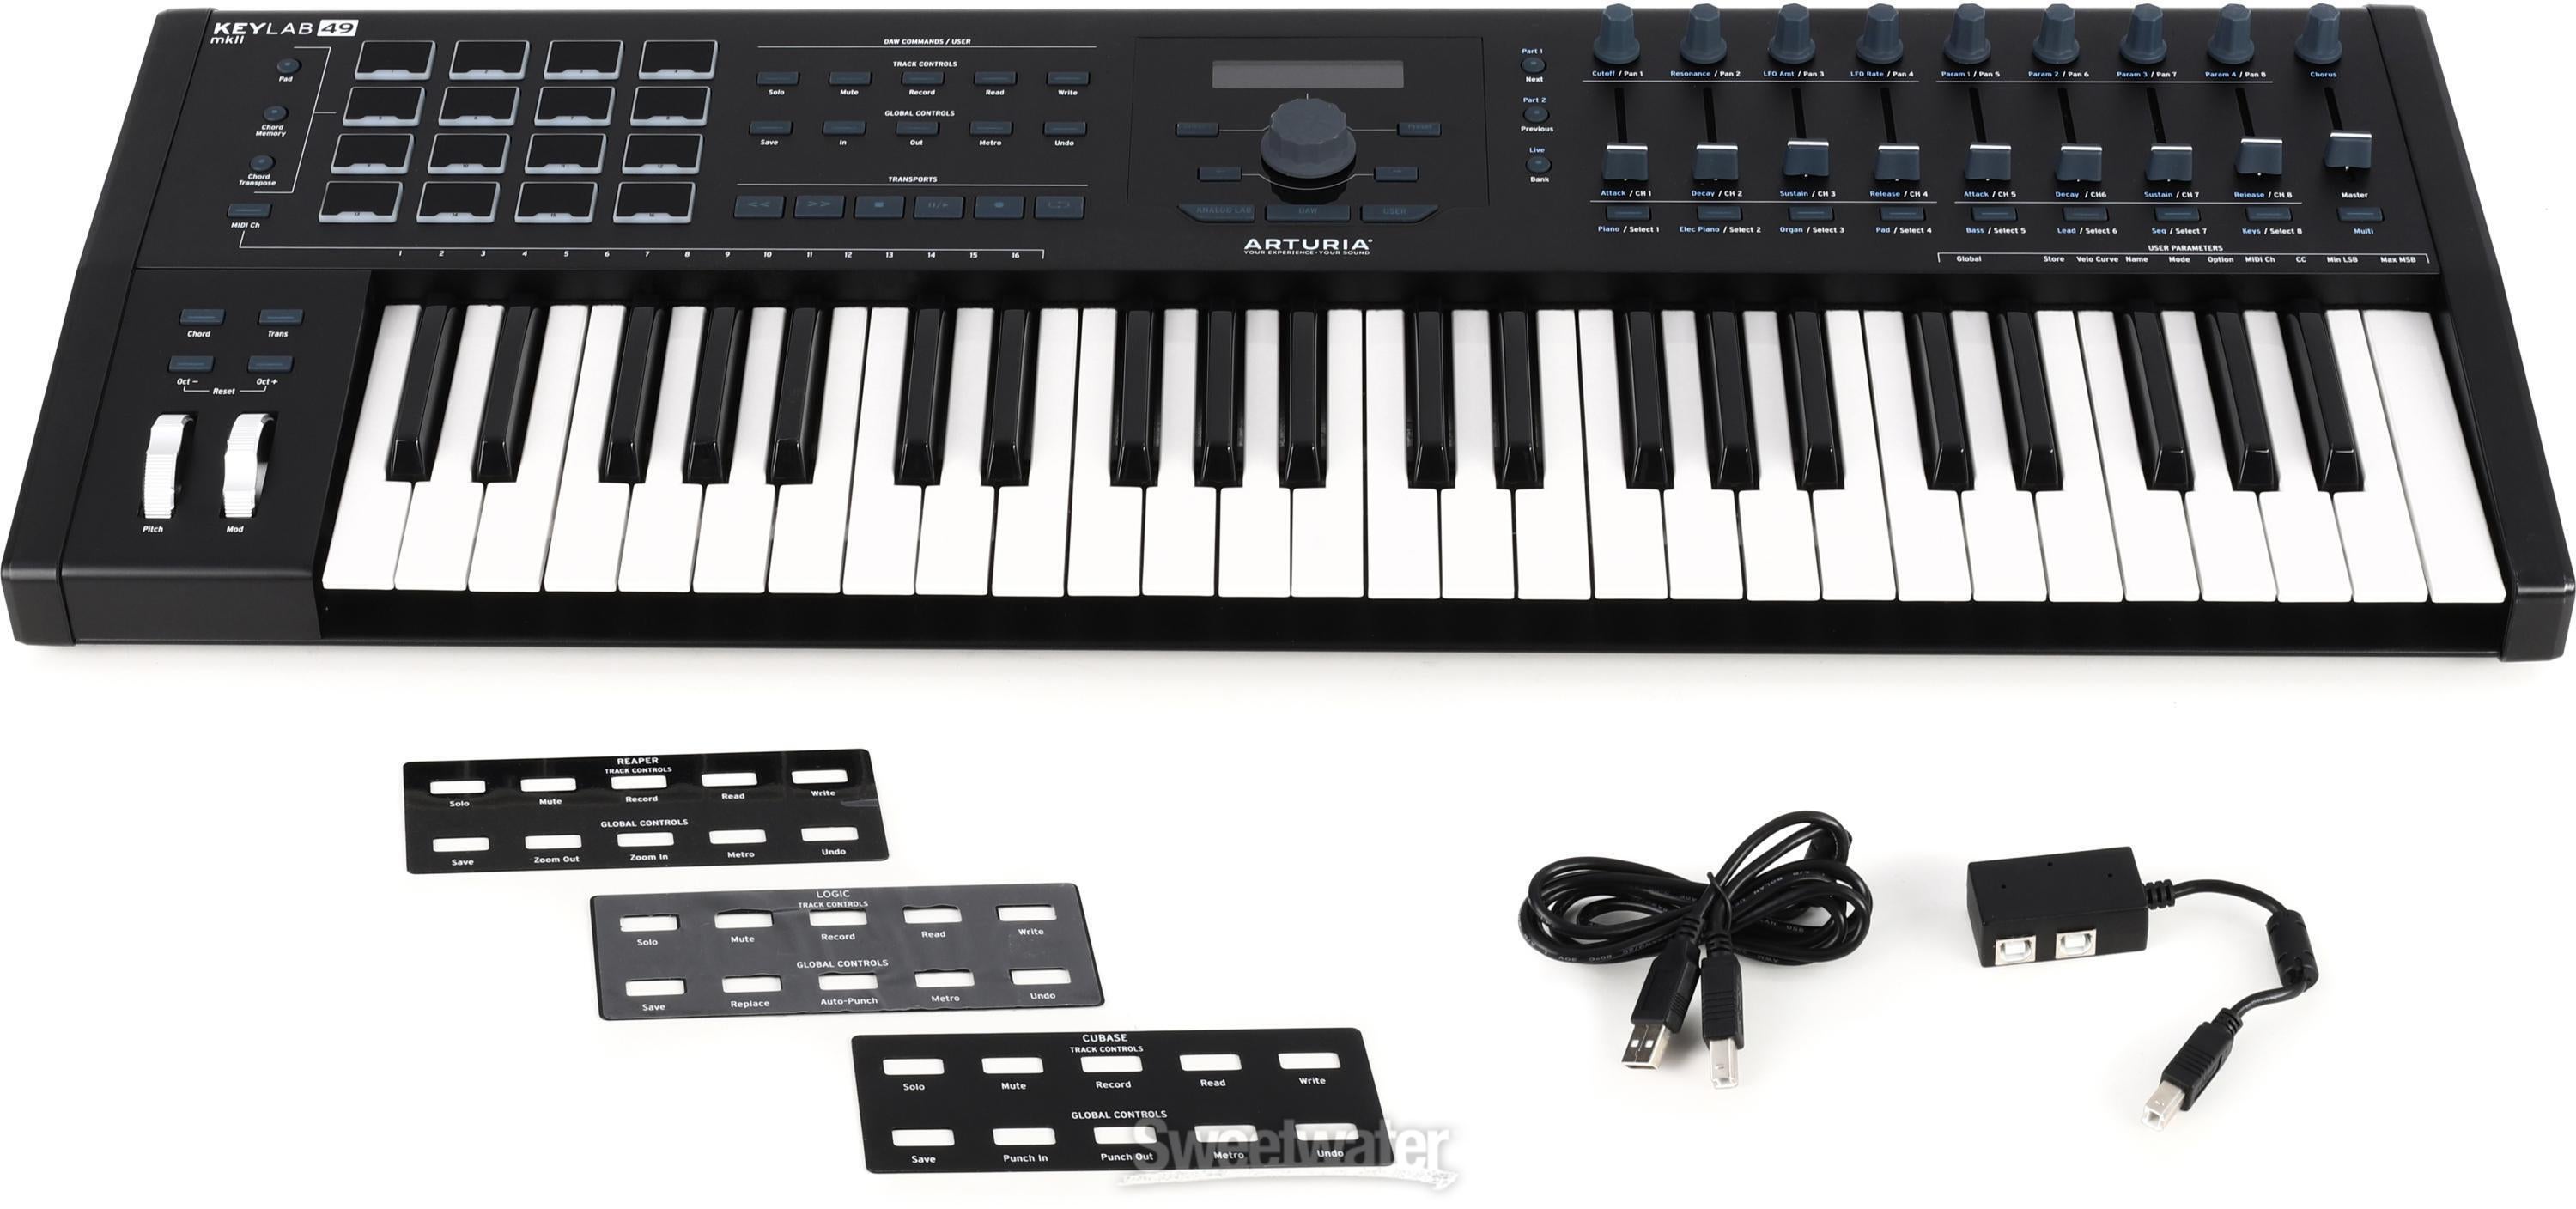 Arturia KeyLab 49 MkII 49-key Keyboard Controller - Black | Sweetwater